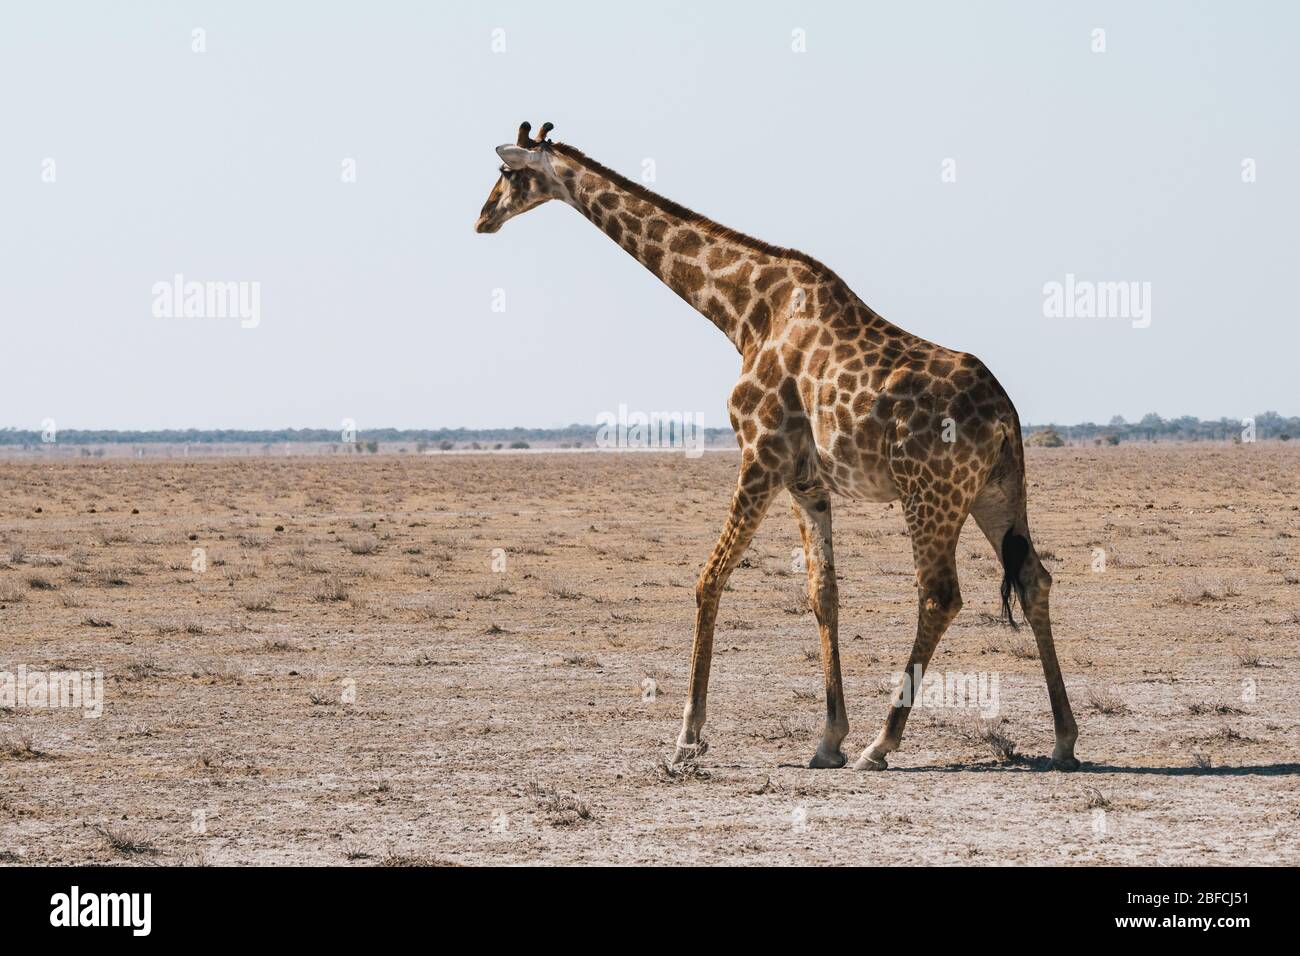 Female Angolan Giraffe Walking in Dry, Arid Plain of Etosha Pan National Park, Namibia, Africa Stock Photo